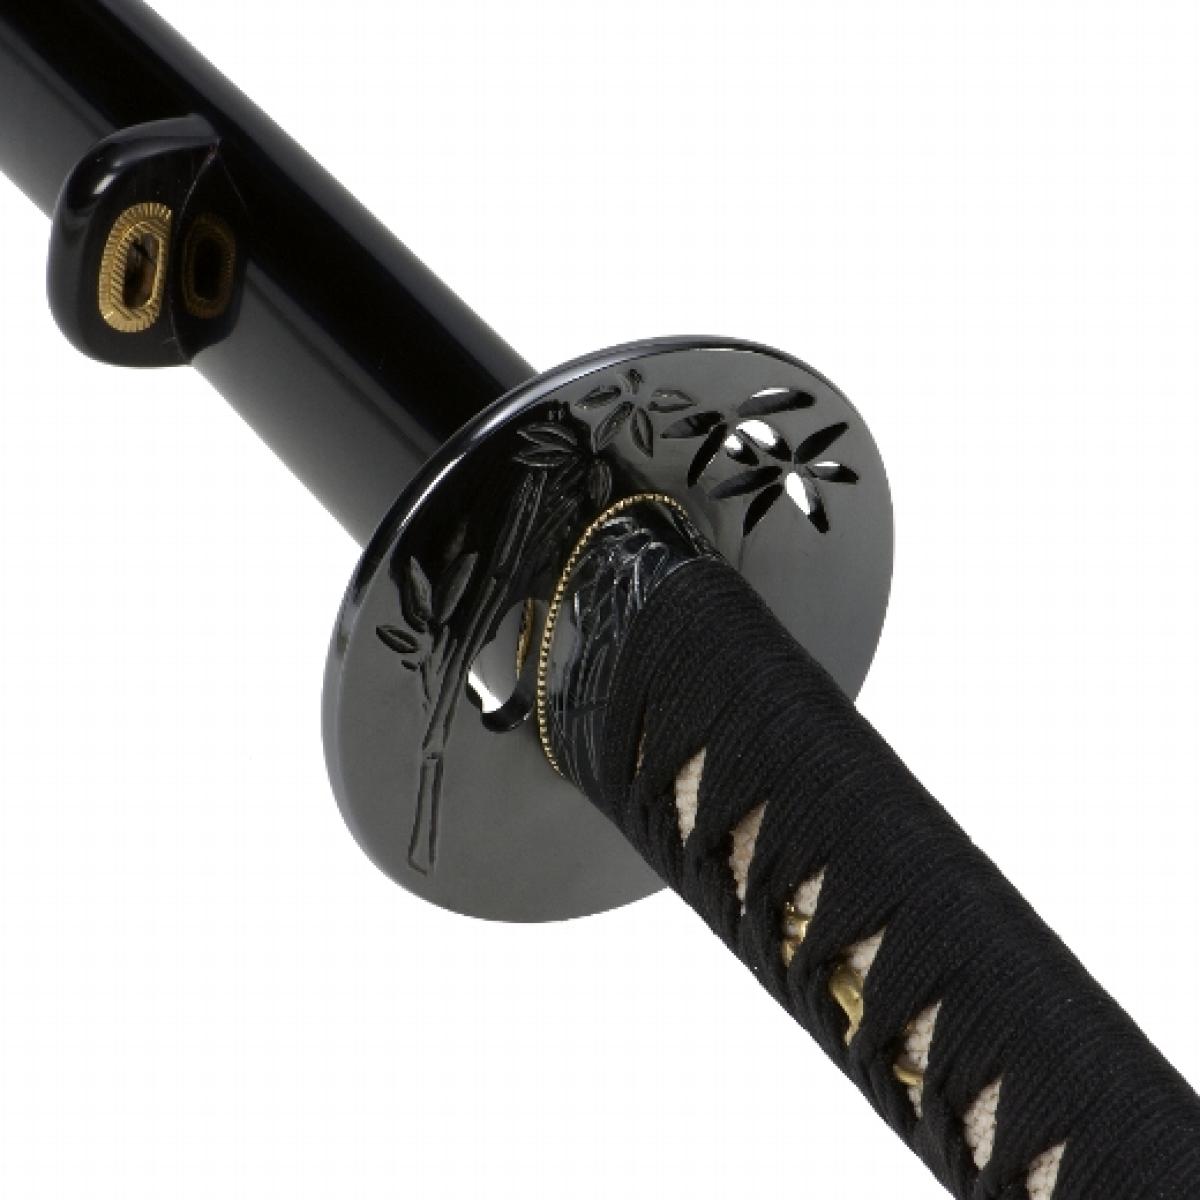 Hand-forged Citadel Bamboo Katana - sharp blade ► www.bokken-shop.de. Suitable for Iaido, Bujinkan, Jodo. Your Katana dealer!